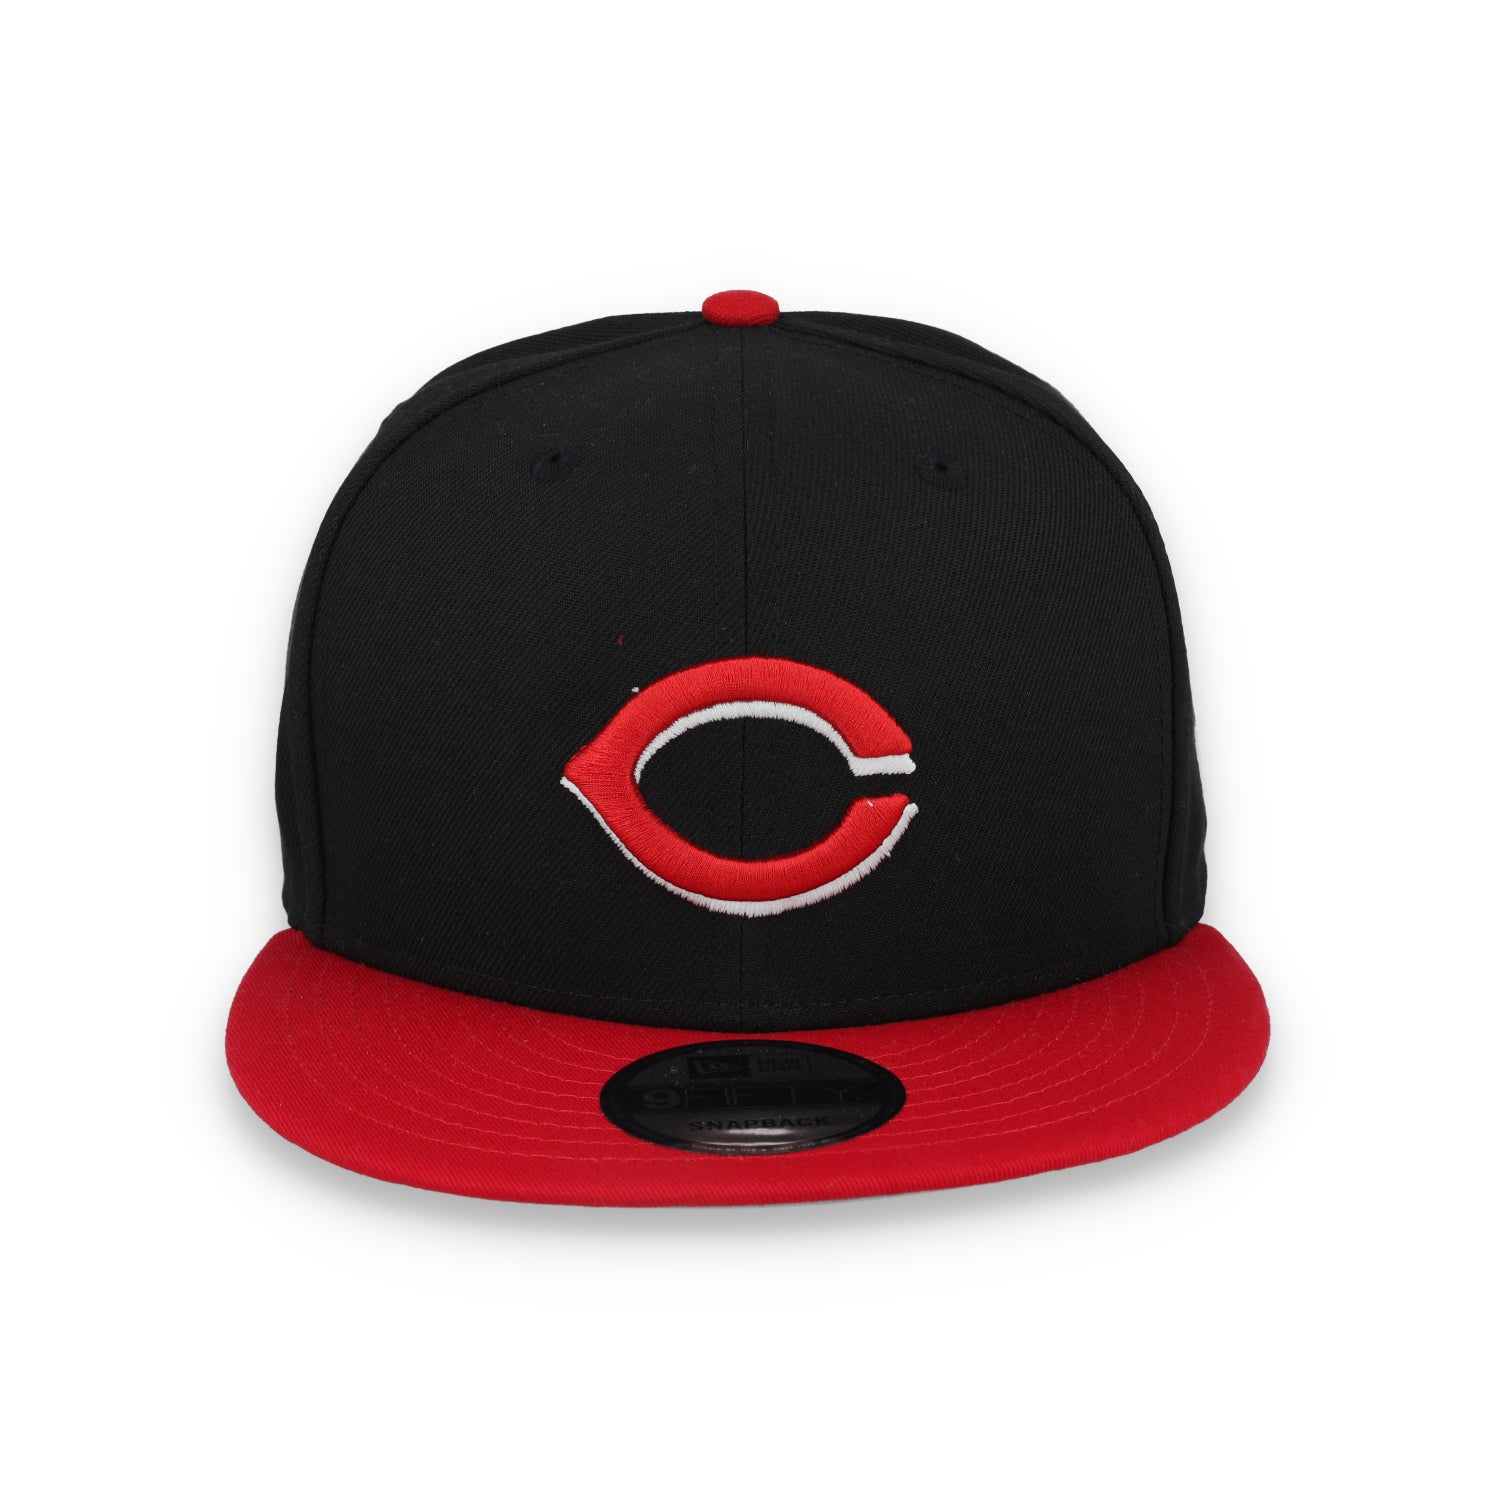 New Era Cincinnati Reds On Field Alternative 9FIFTY Snapback Hat